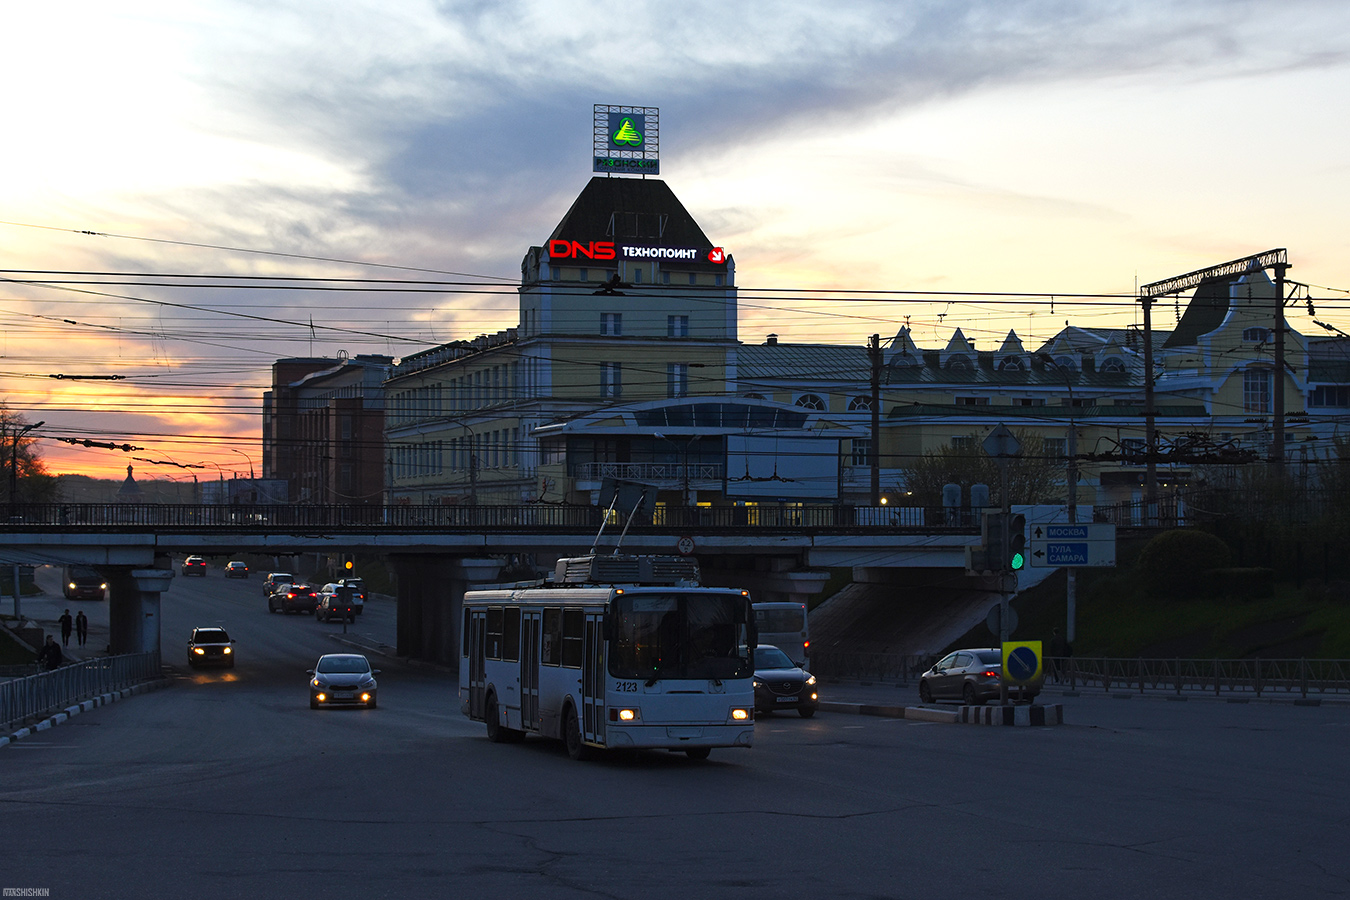 Ryazan — Trolleybus Lines and Infrastructure